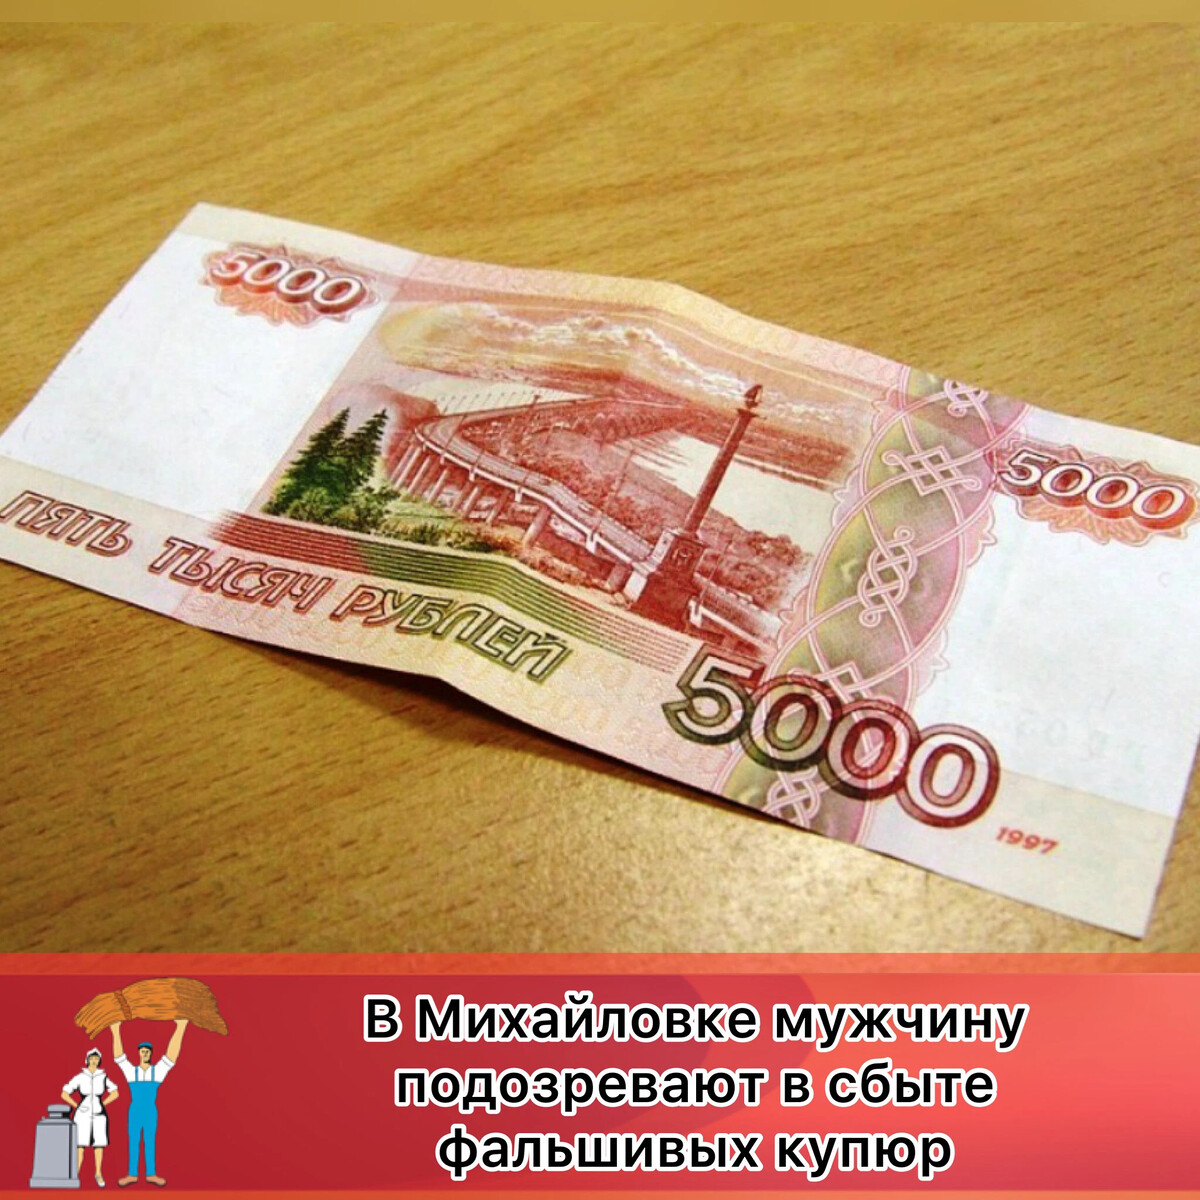 Нашла 5000 рублей